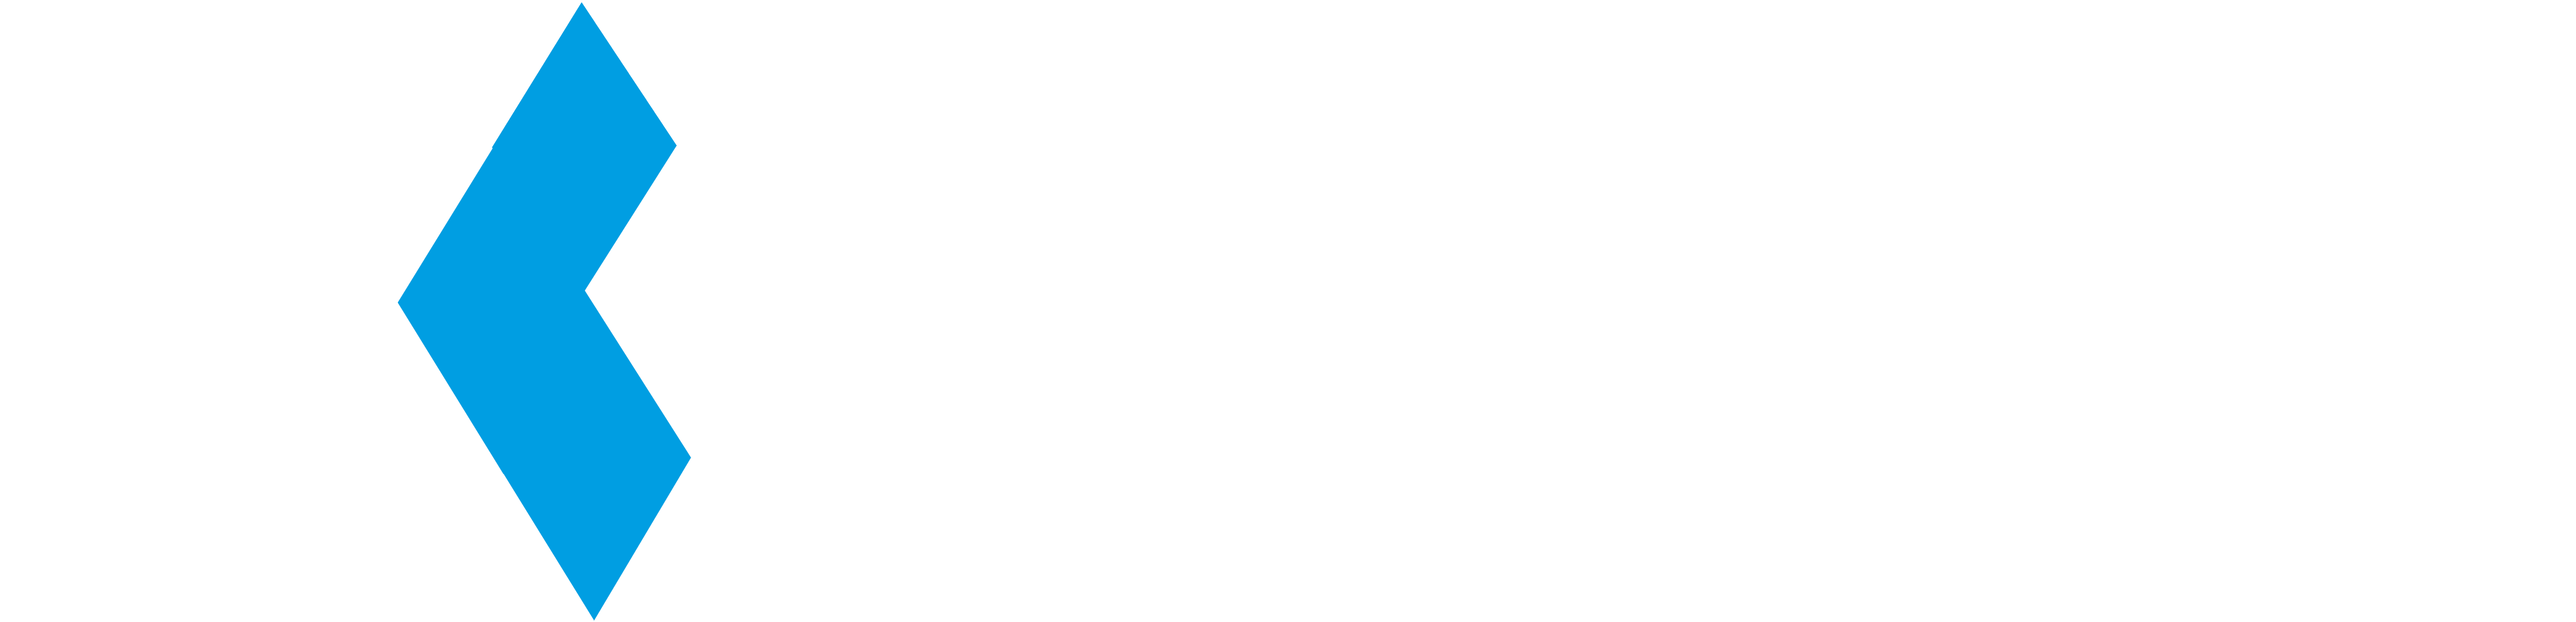 Inspiration Lamp Concept